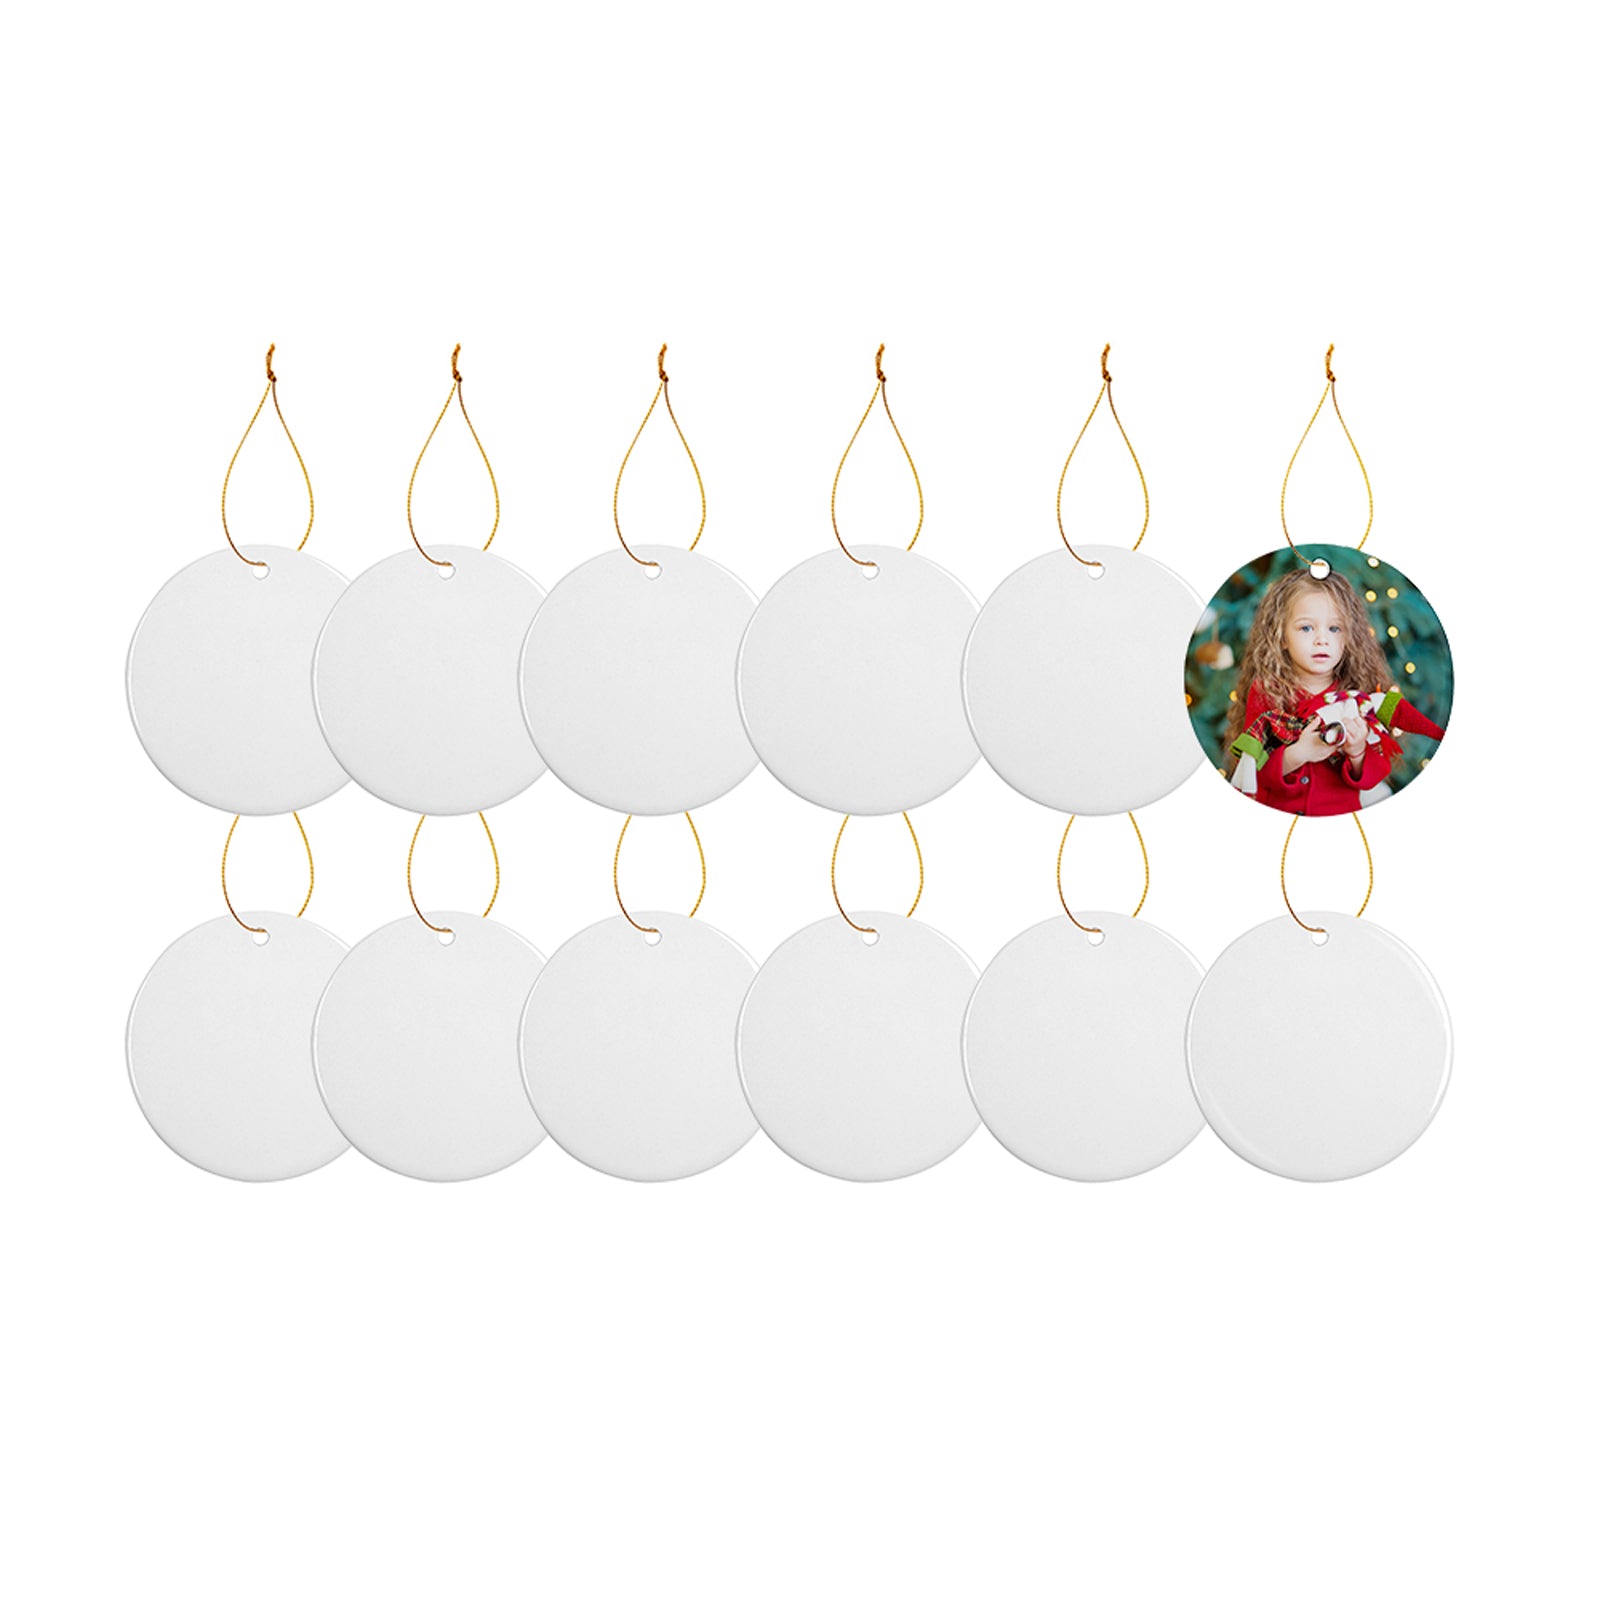 sublimation blank led acrylic ornaments items hot transfer